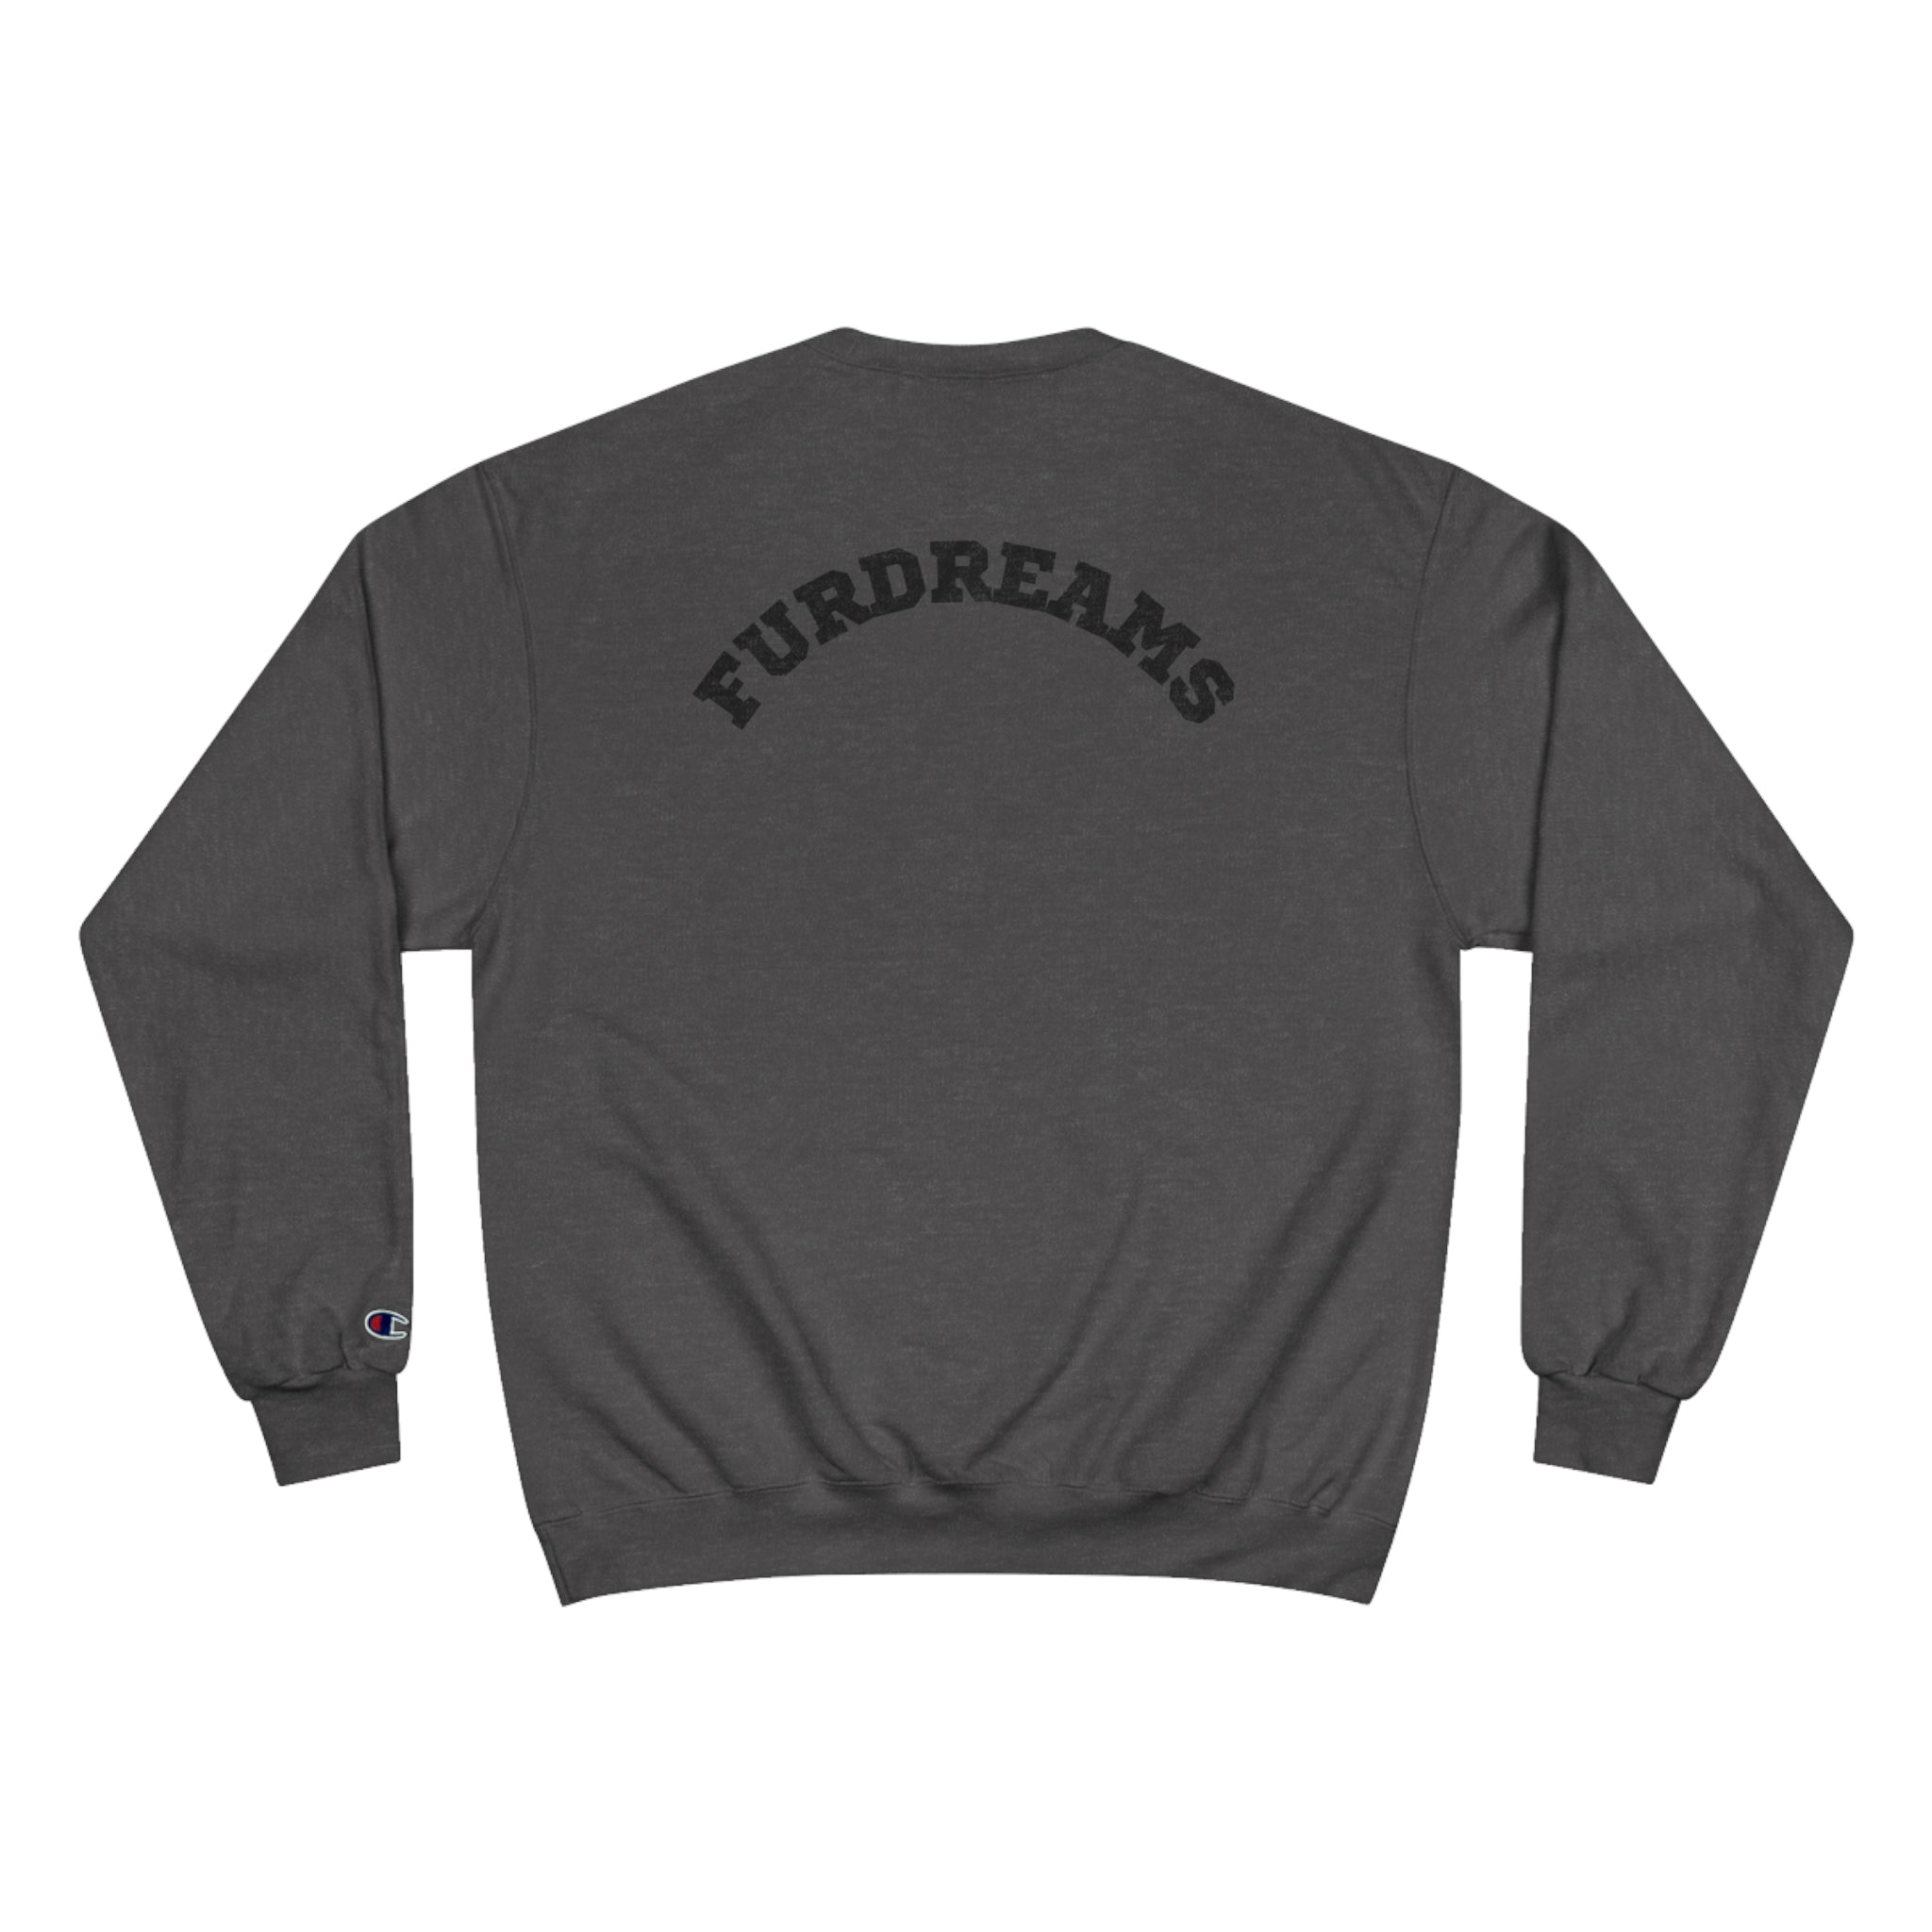 Lady FURDreams “Earth” Champion Sweatshirt